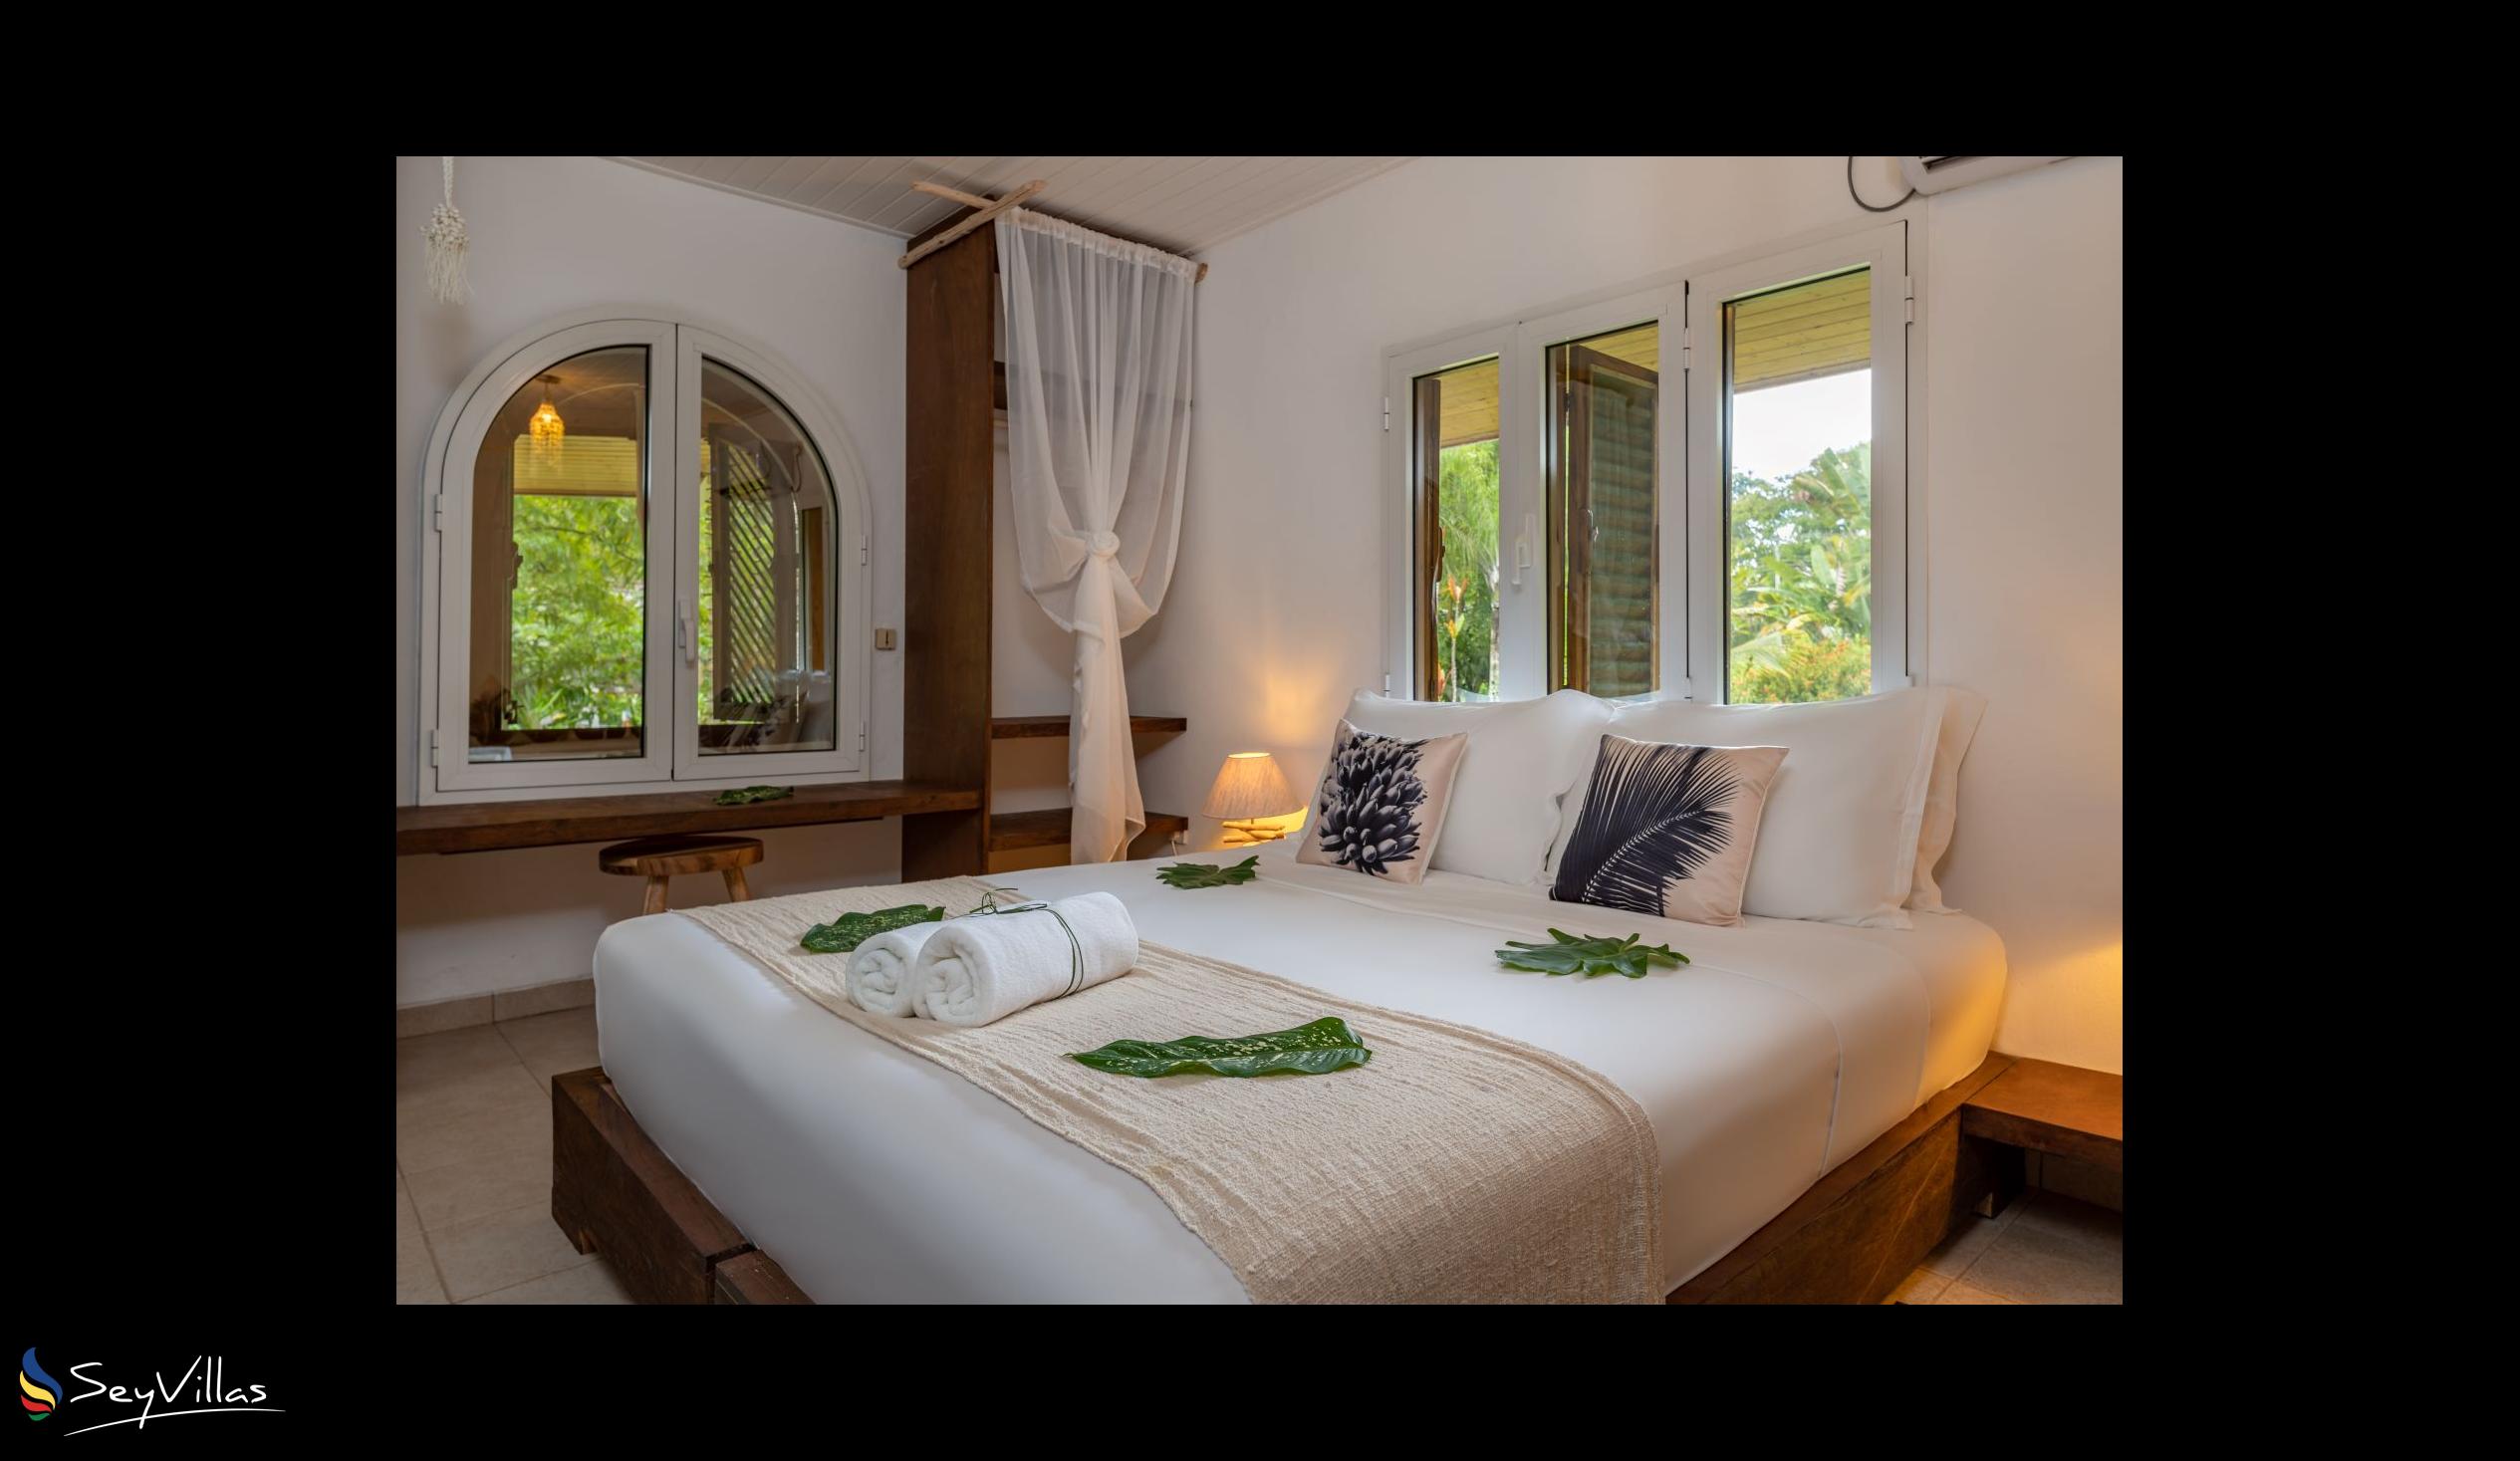 Foto 60: Bliss Hotel Praslin - Eden Garden - Camera Charme - Praslin (Seychelles)